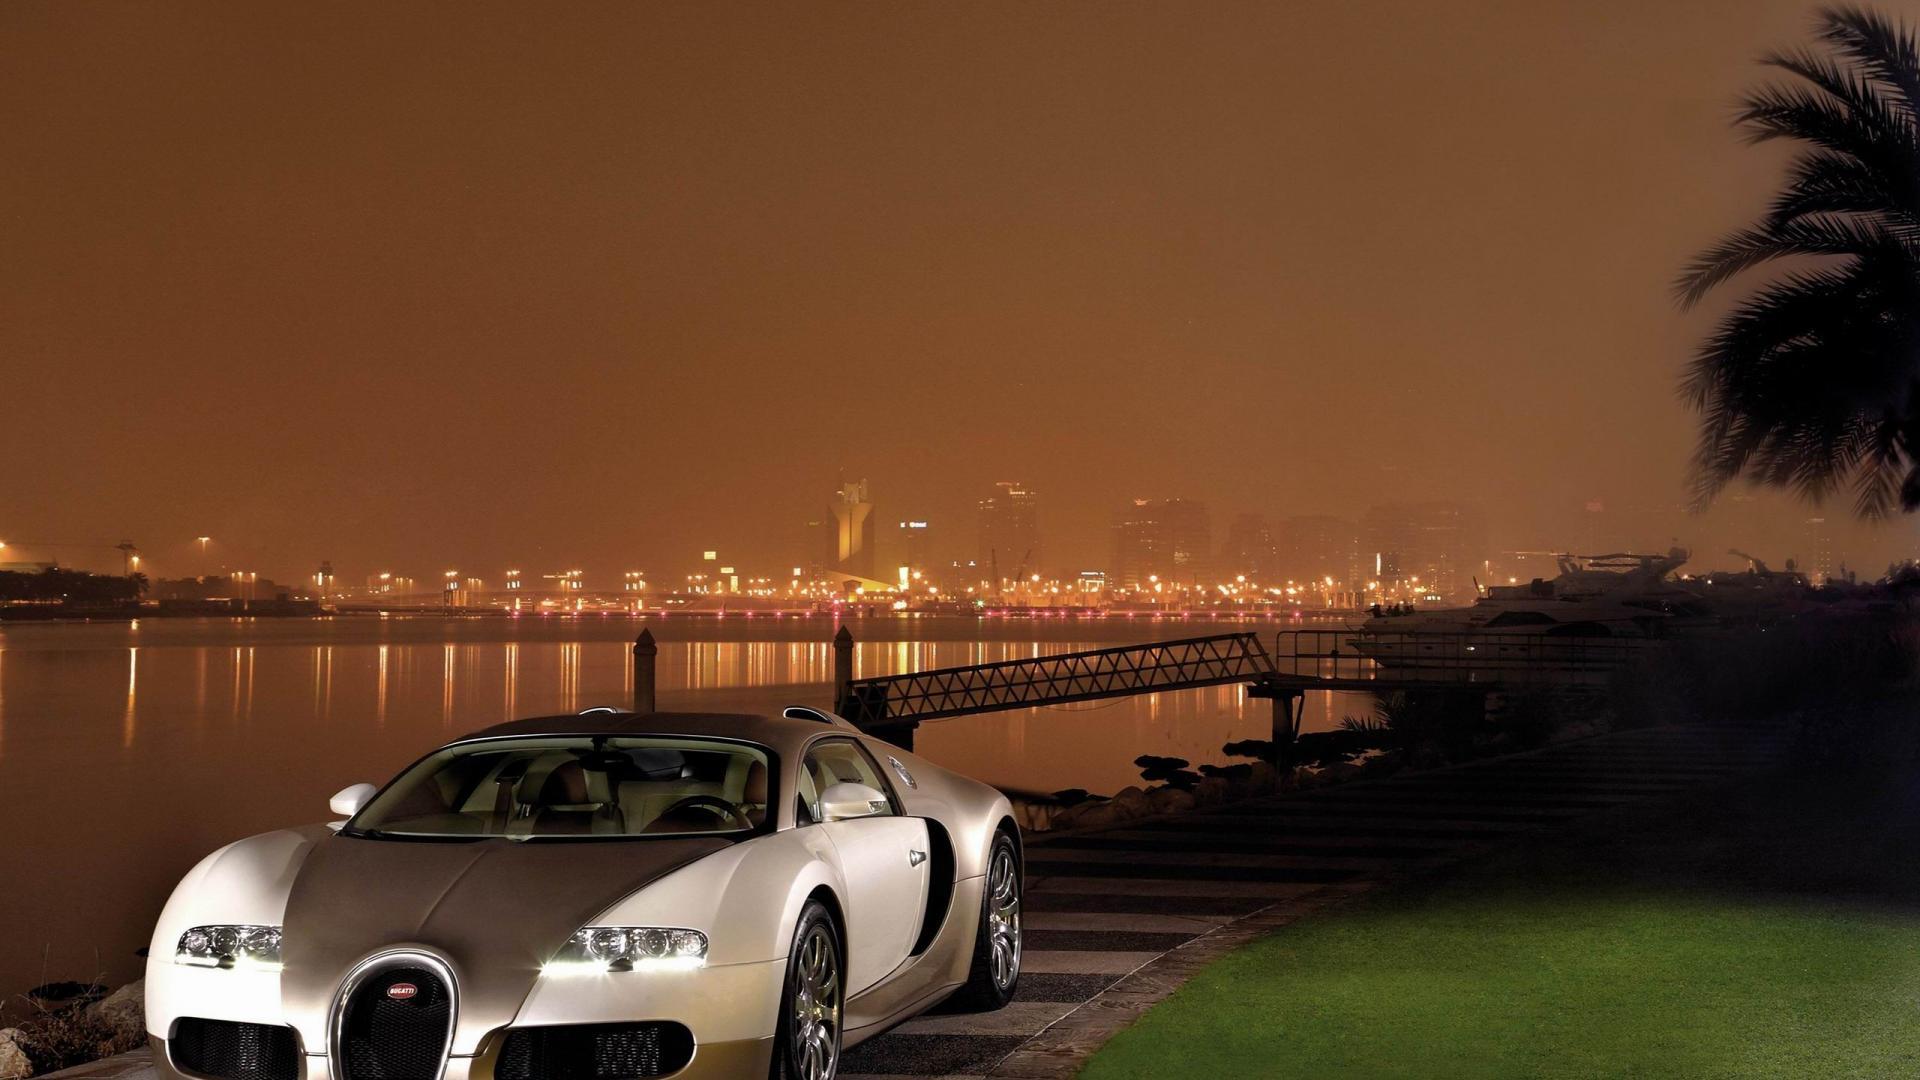 Gold Bugatti Veyron By The River wallpaper | cars | Wallpaper Better